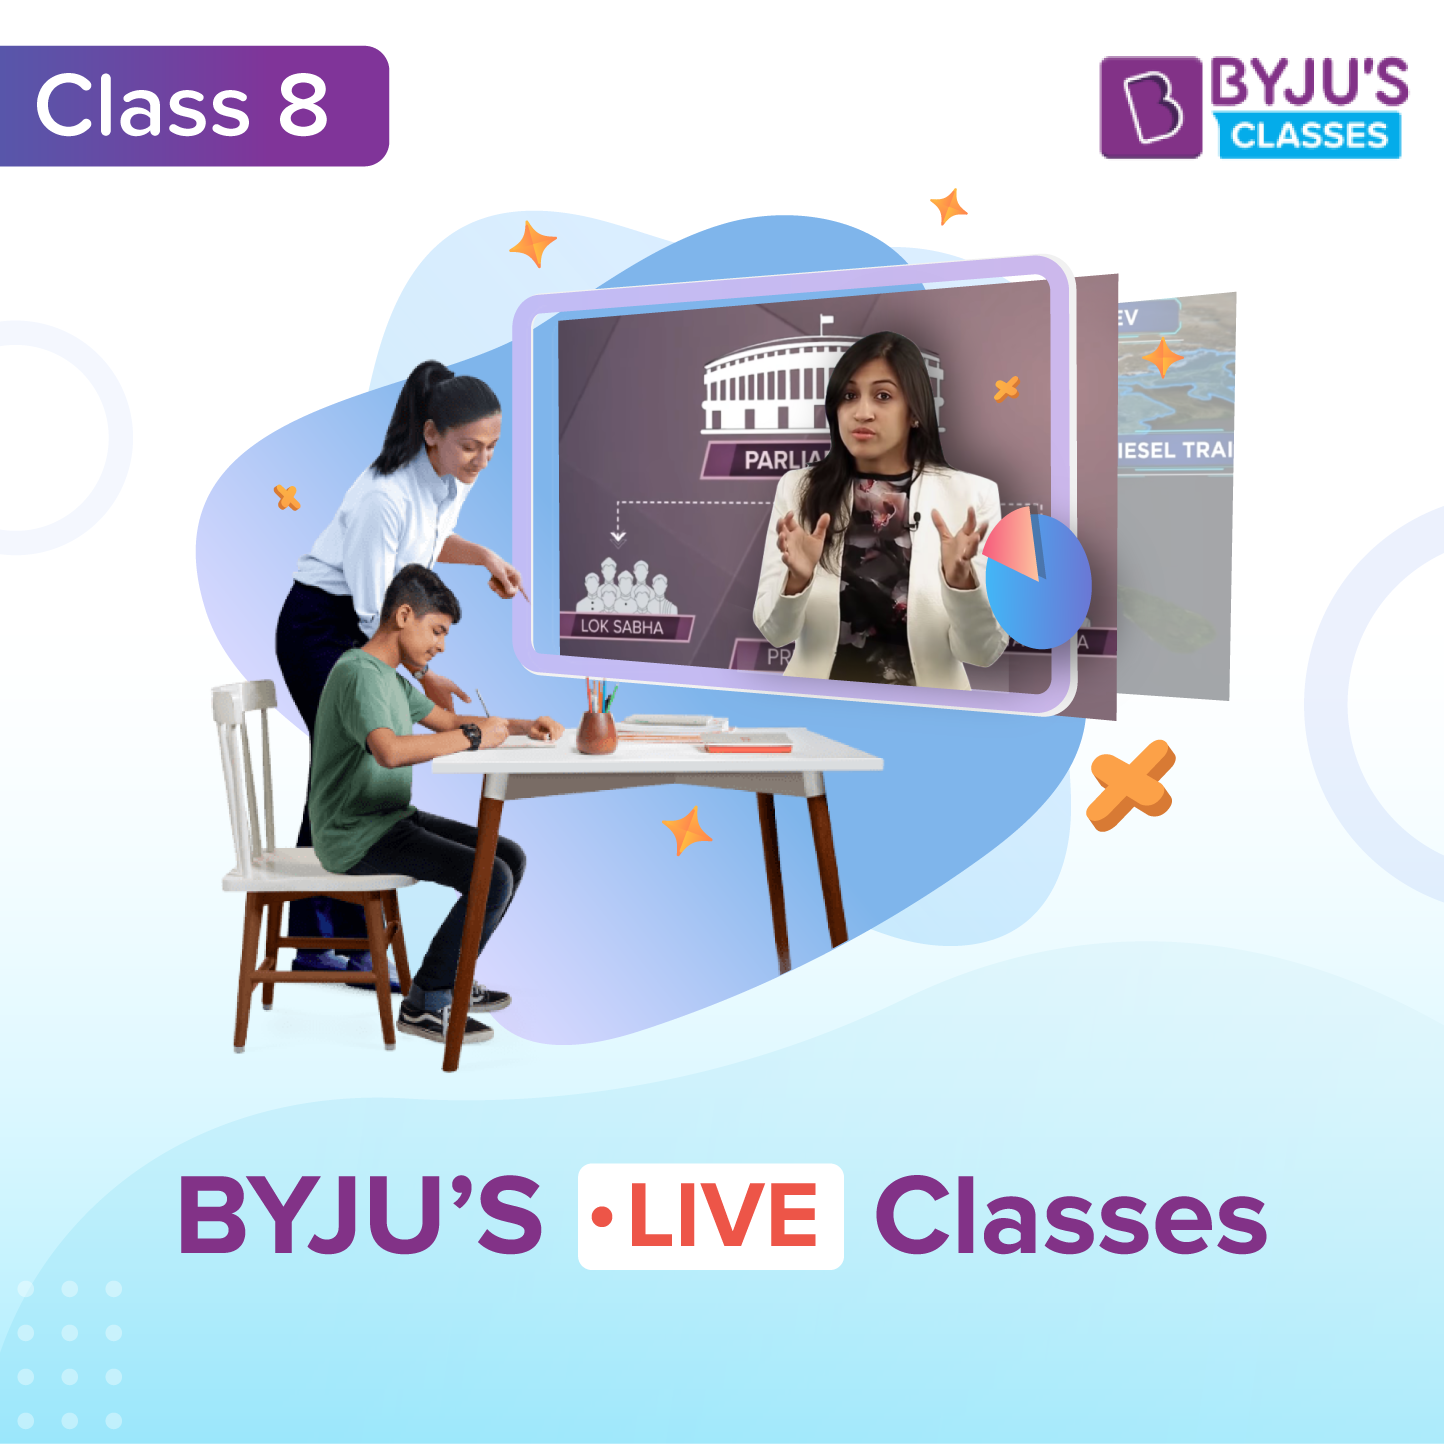 BYJU'S Live Classes - Class 8